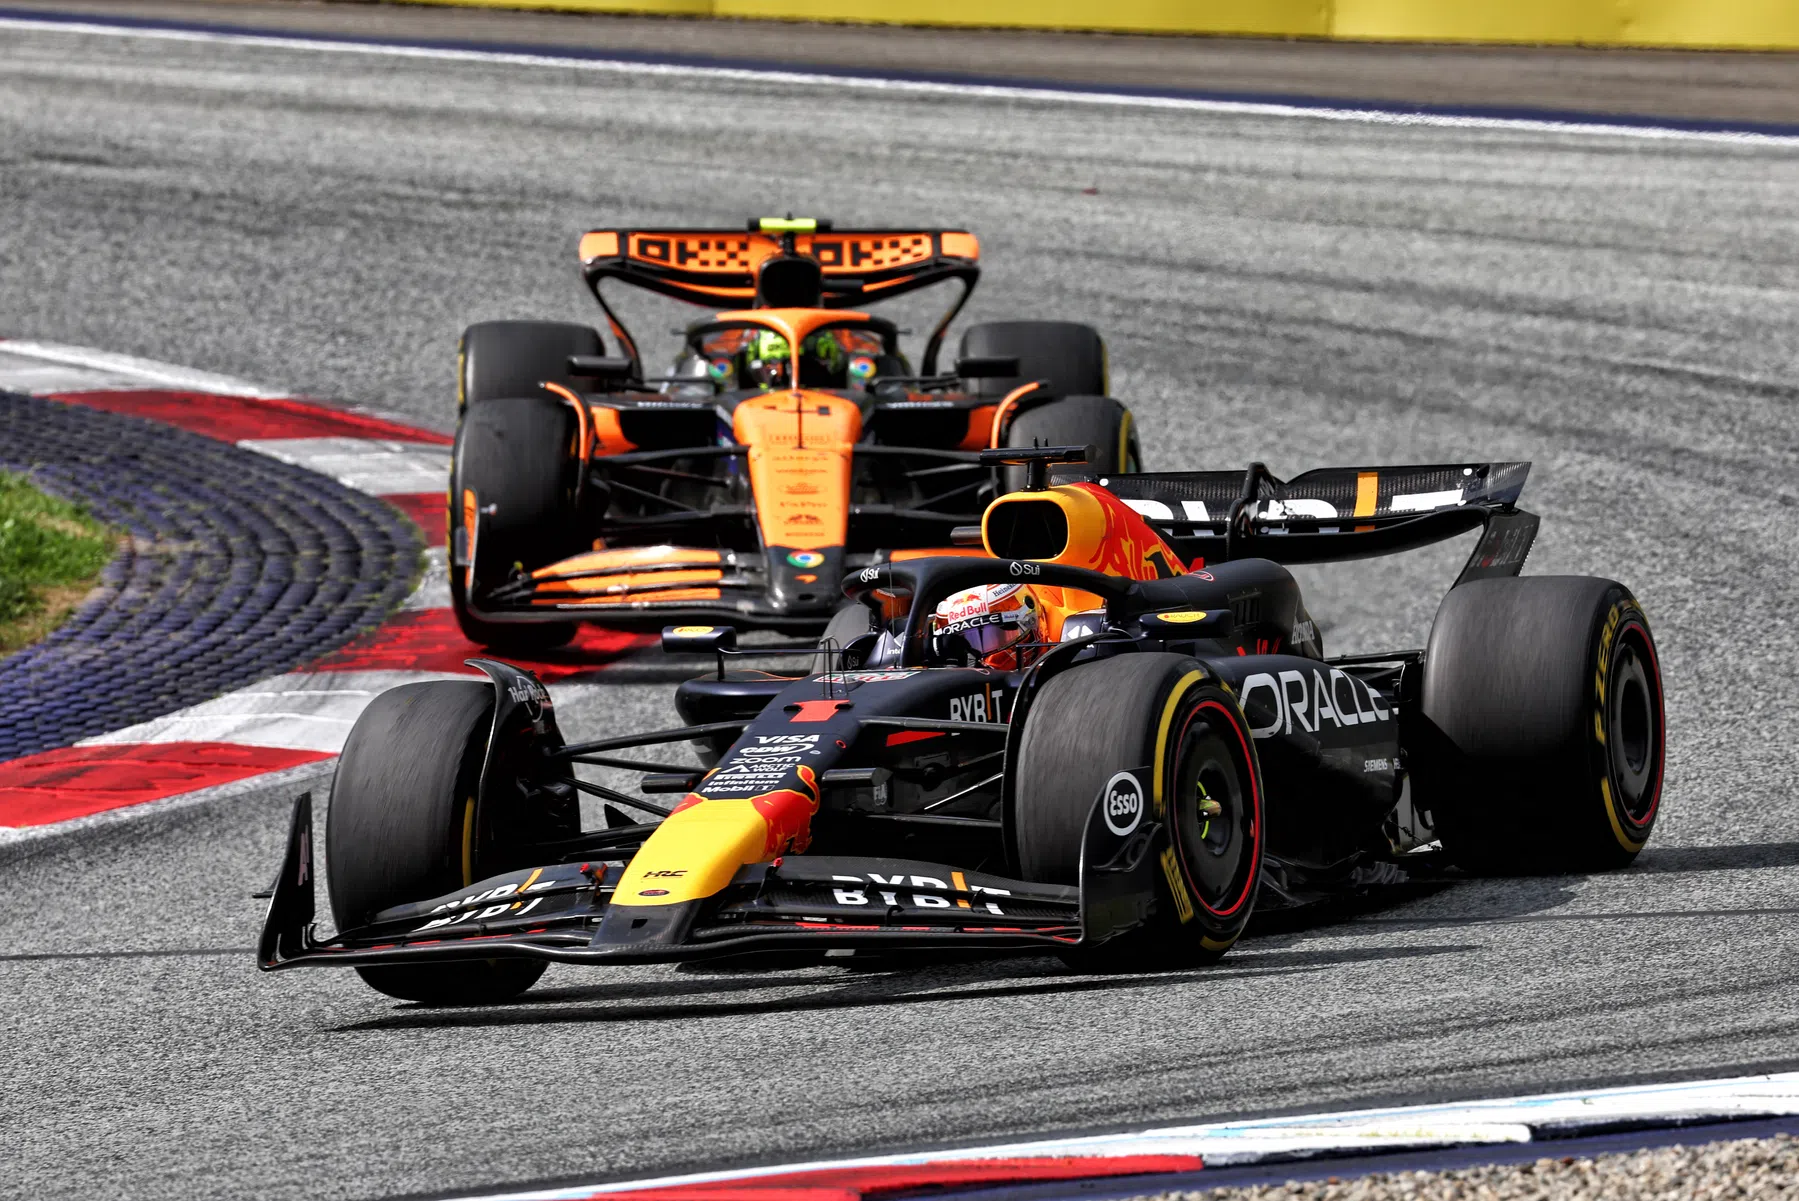 McLaren share remarkable post on social media in Red Bull dig